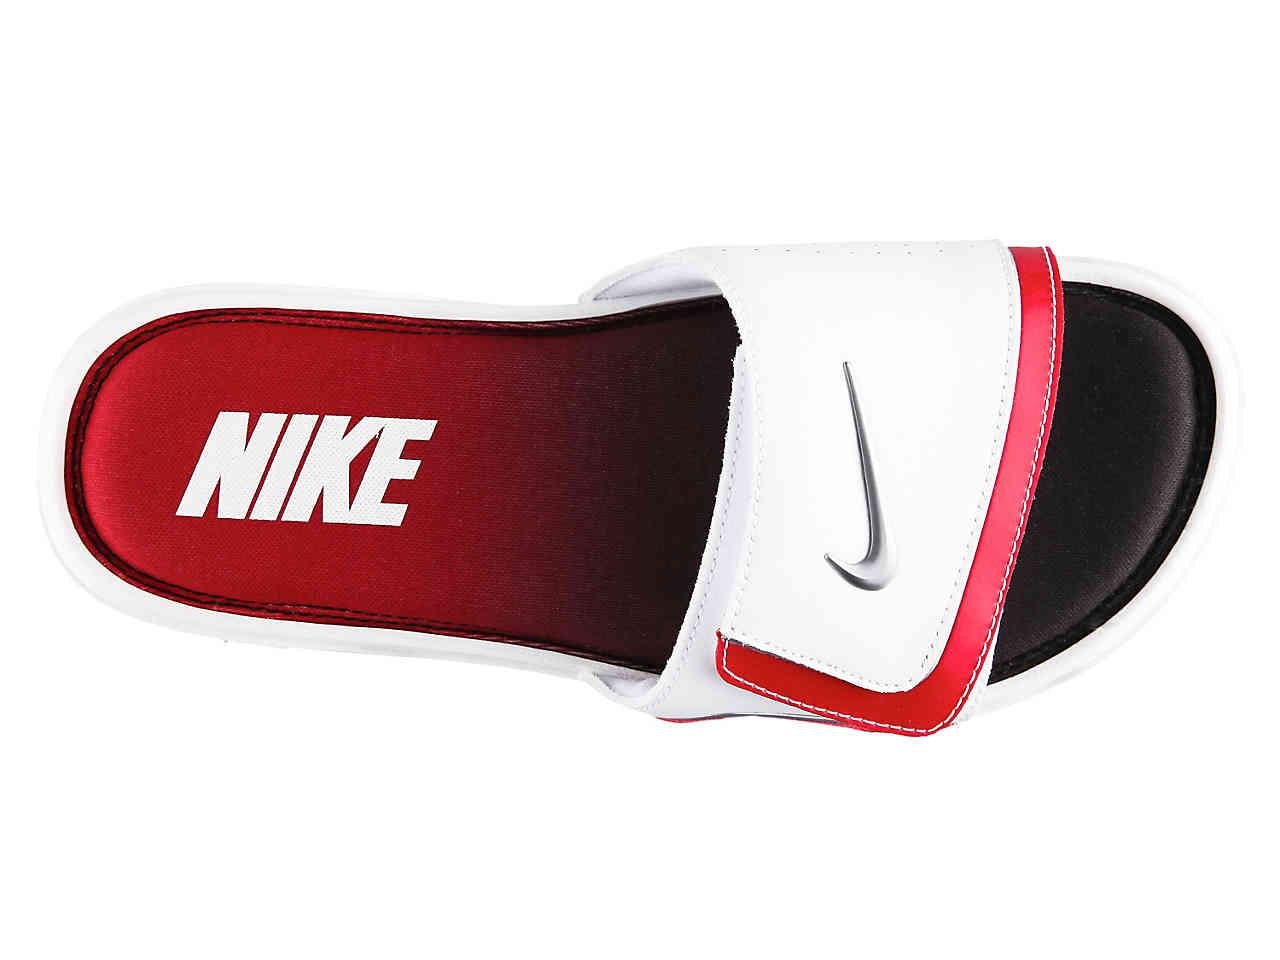 Nike Comfort Slide 2 Sandal in Red | Lyst